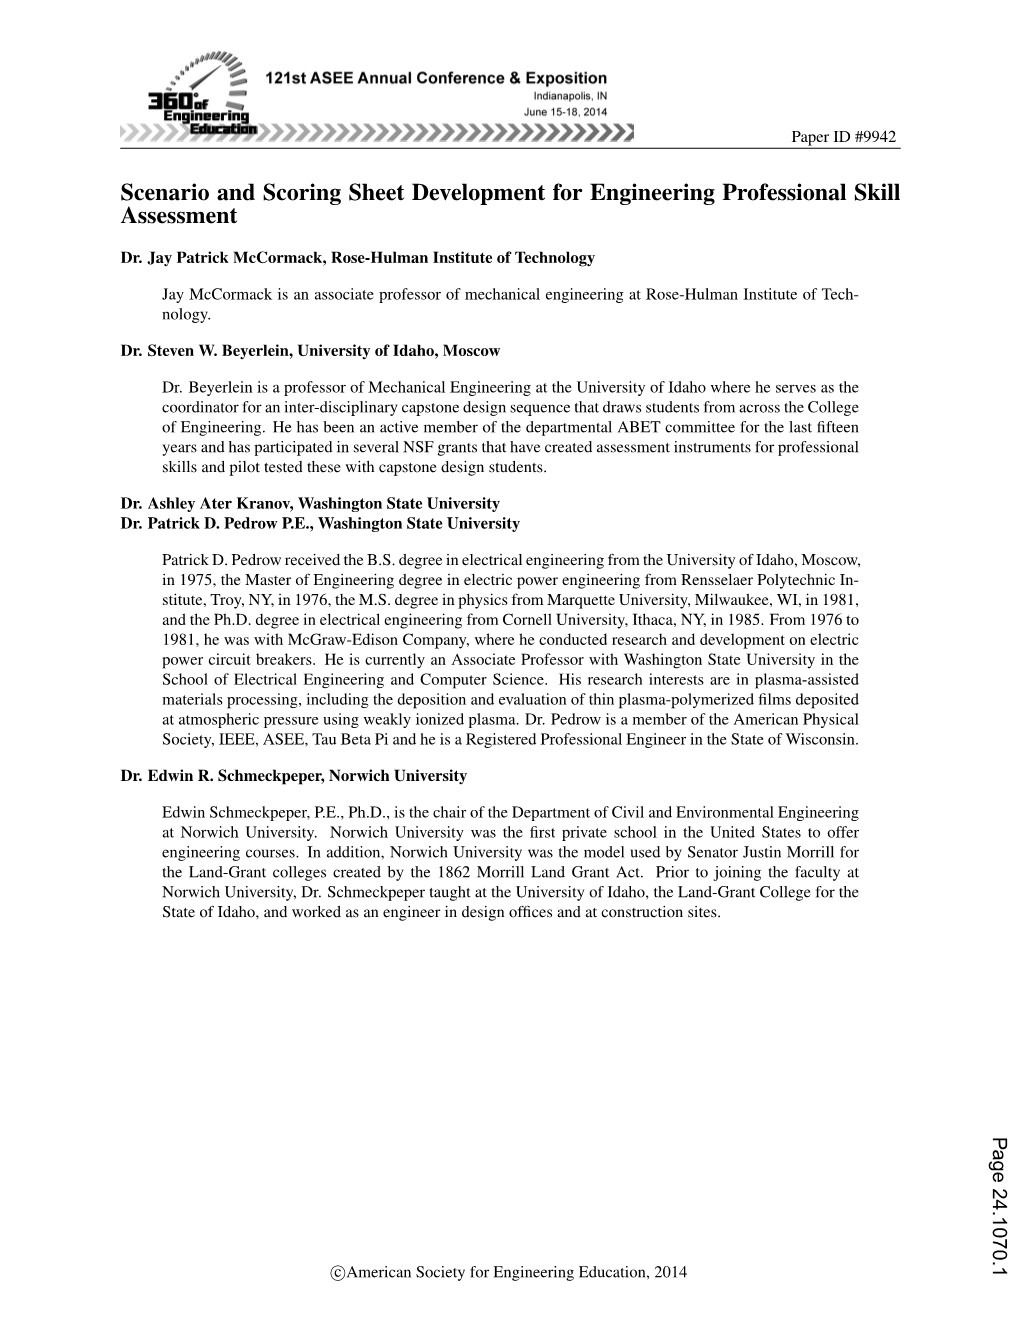 Scenario and Scoring Sheet Development for Engineering Professional Skill Assessment